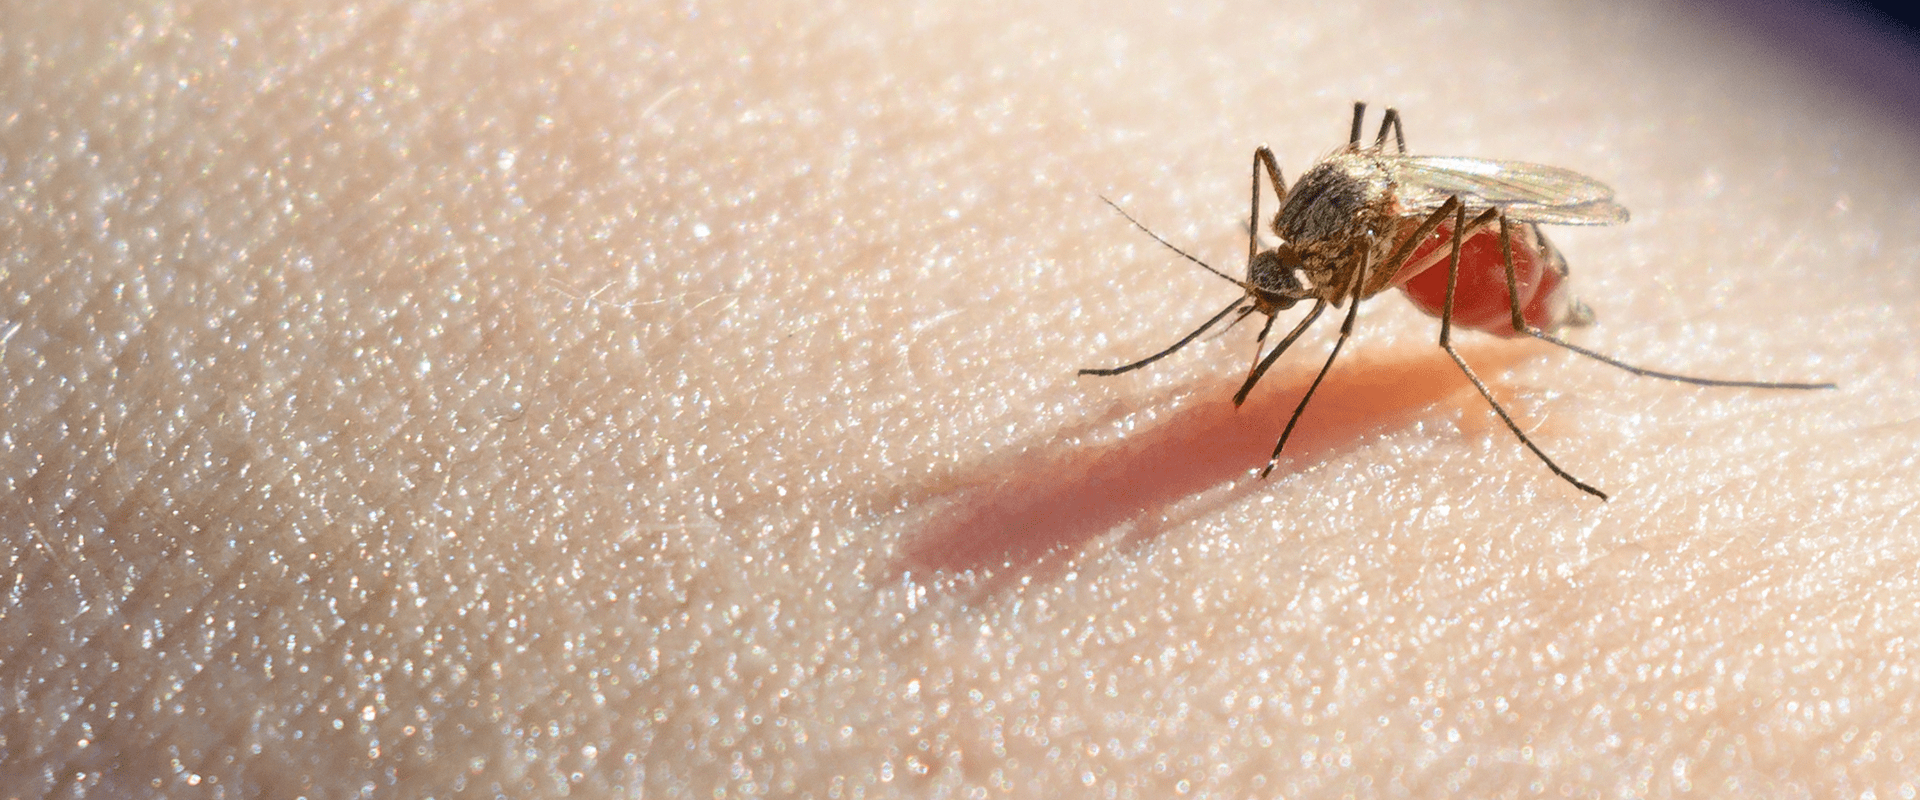 mosquito biting lenoir homeowner